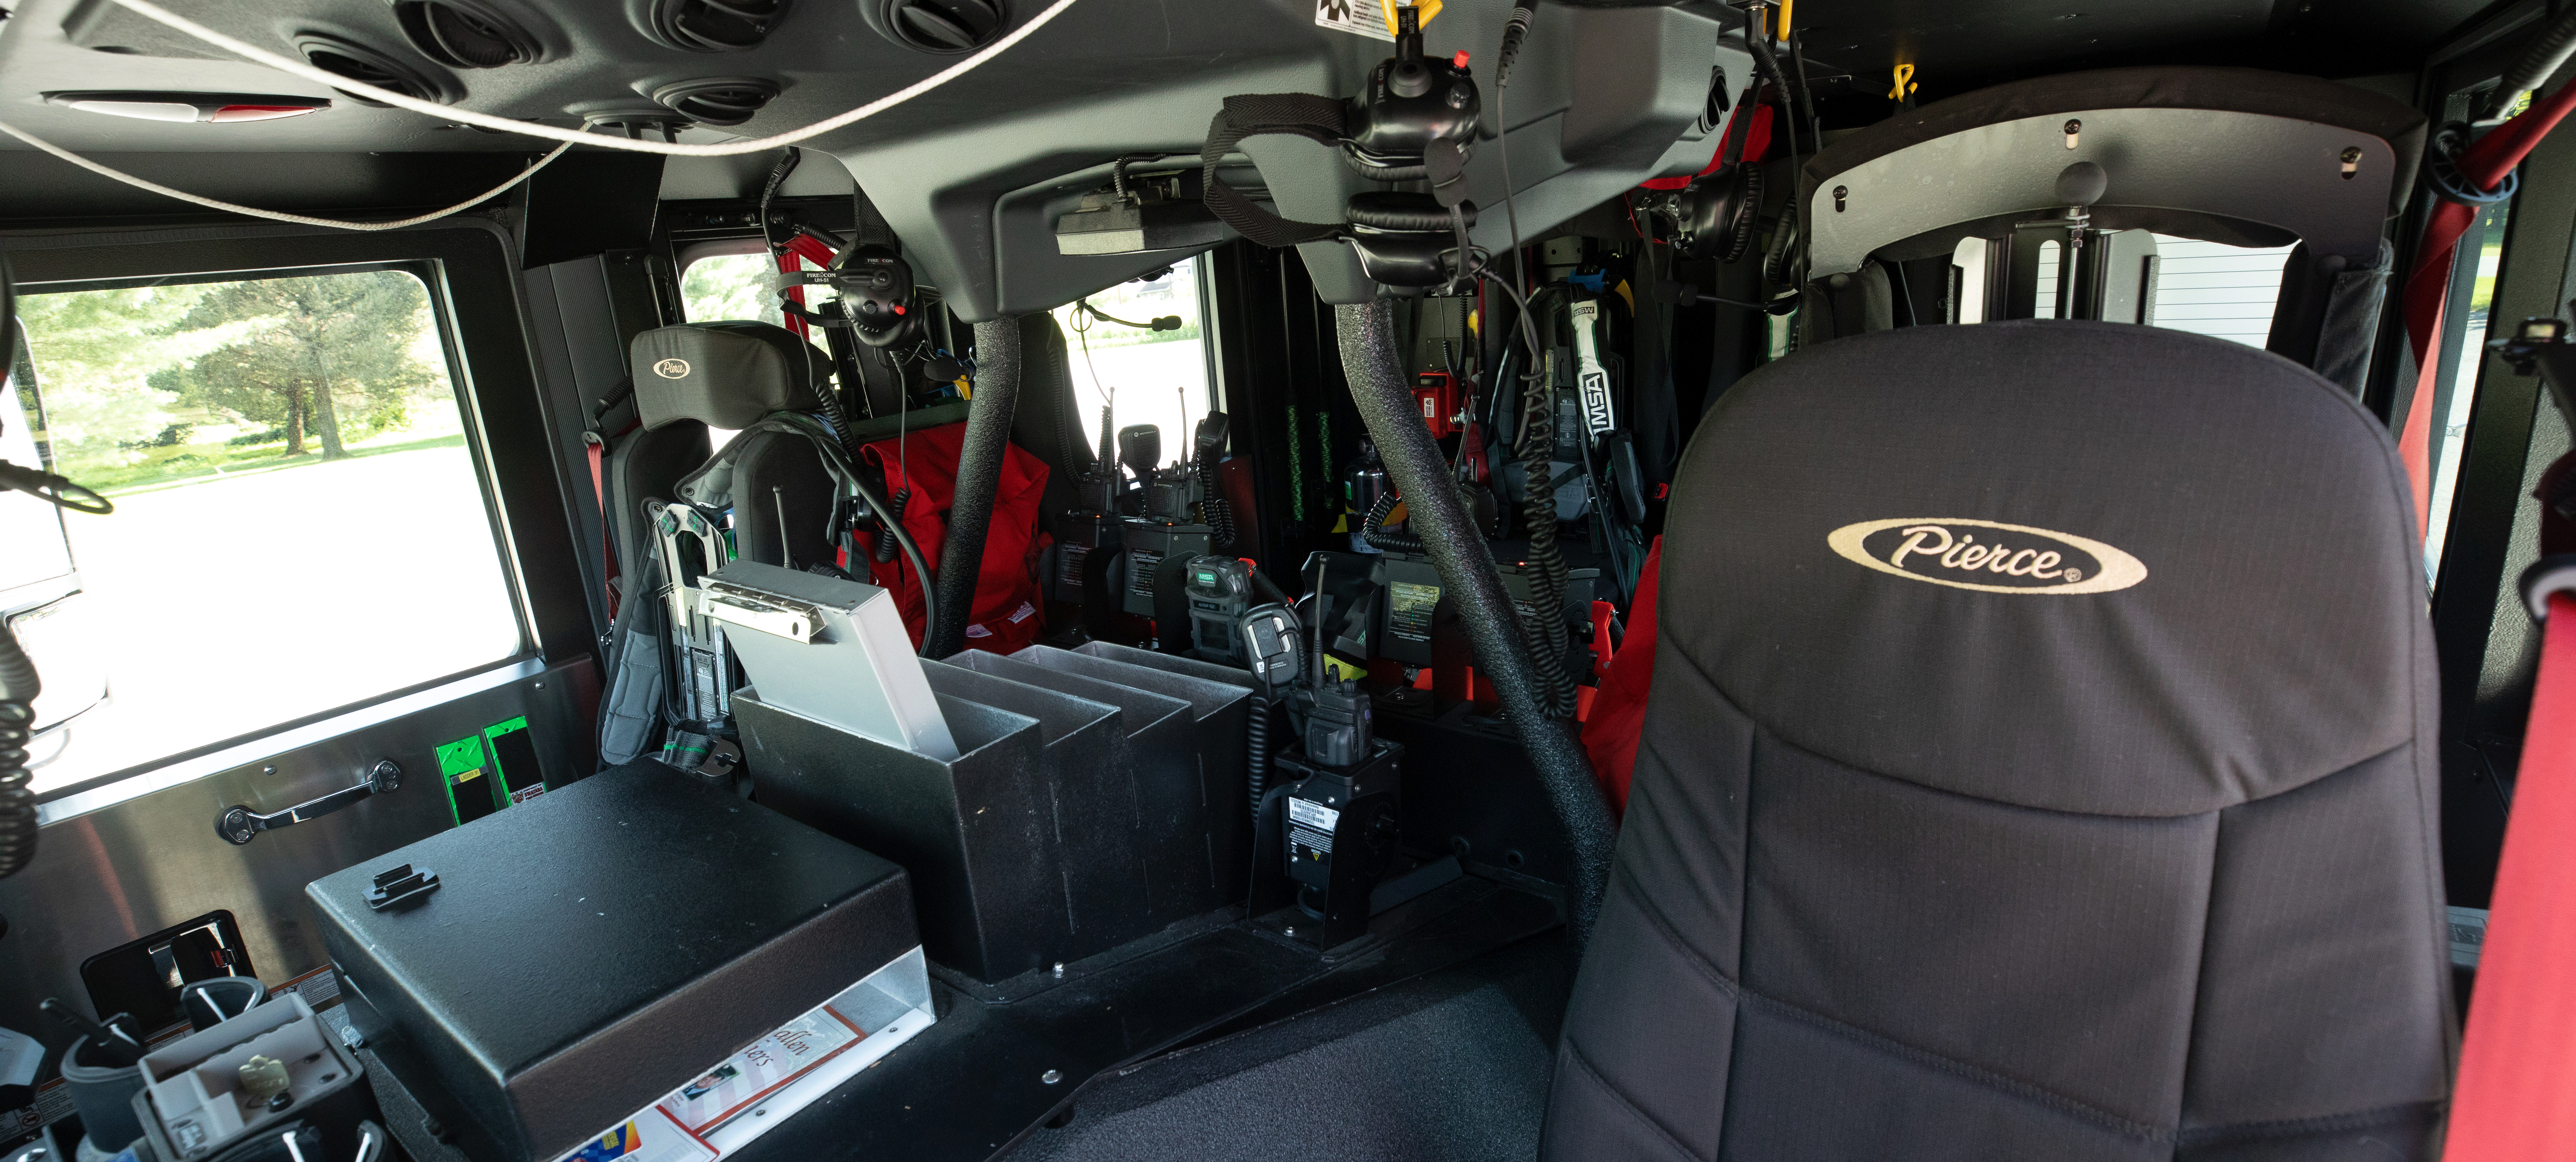 Pierce Enforcer Custom Fire Truck Chassis Cab Interior